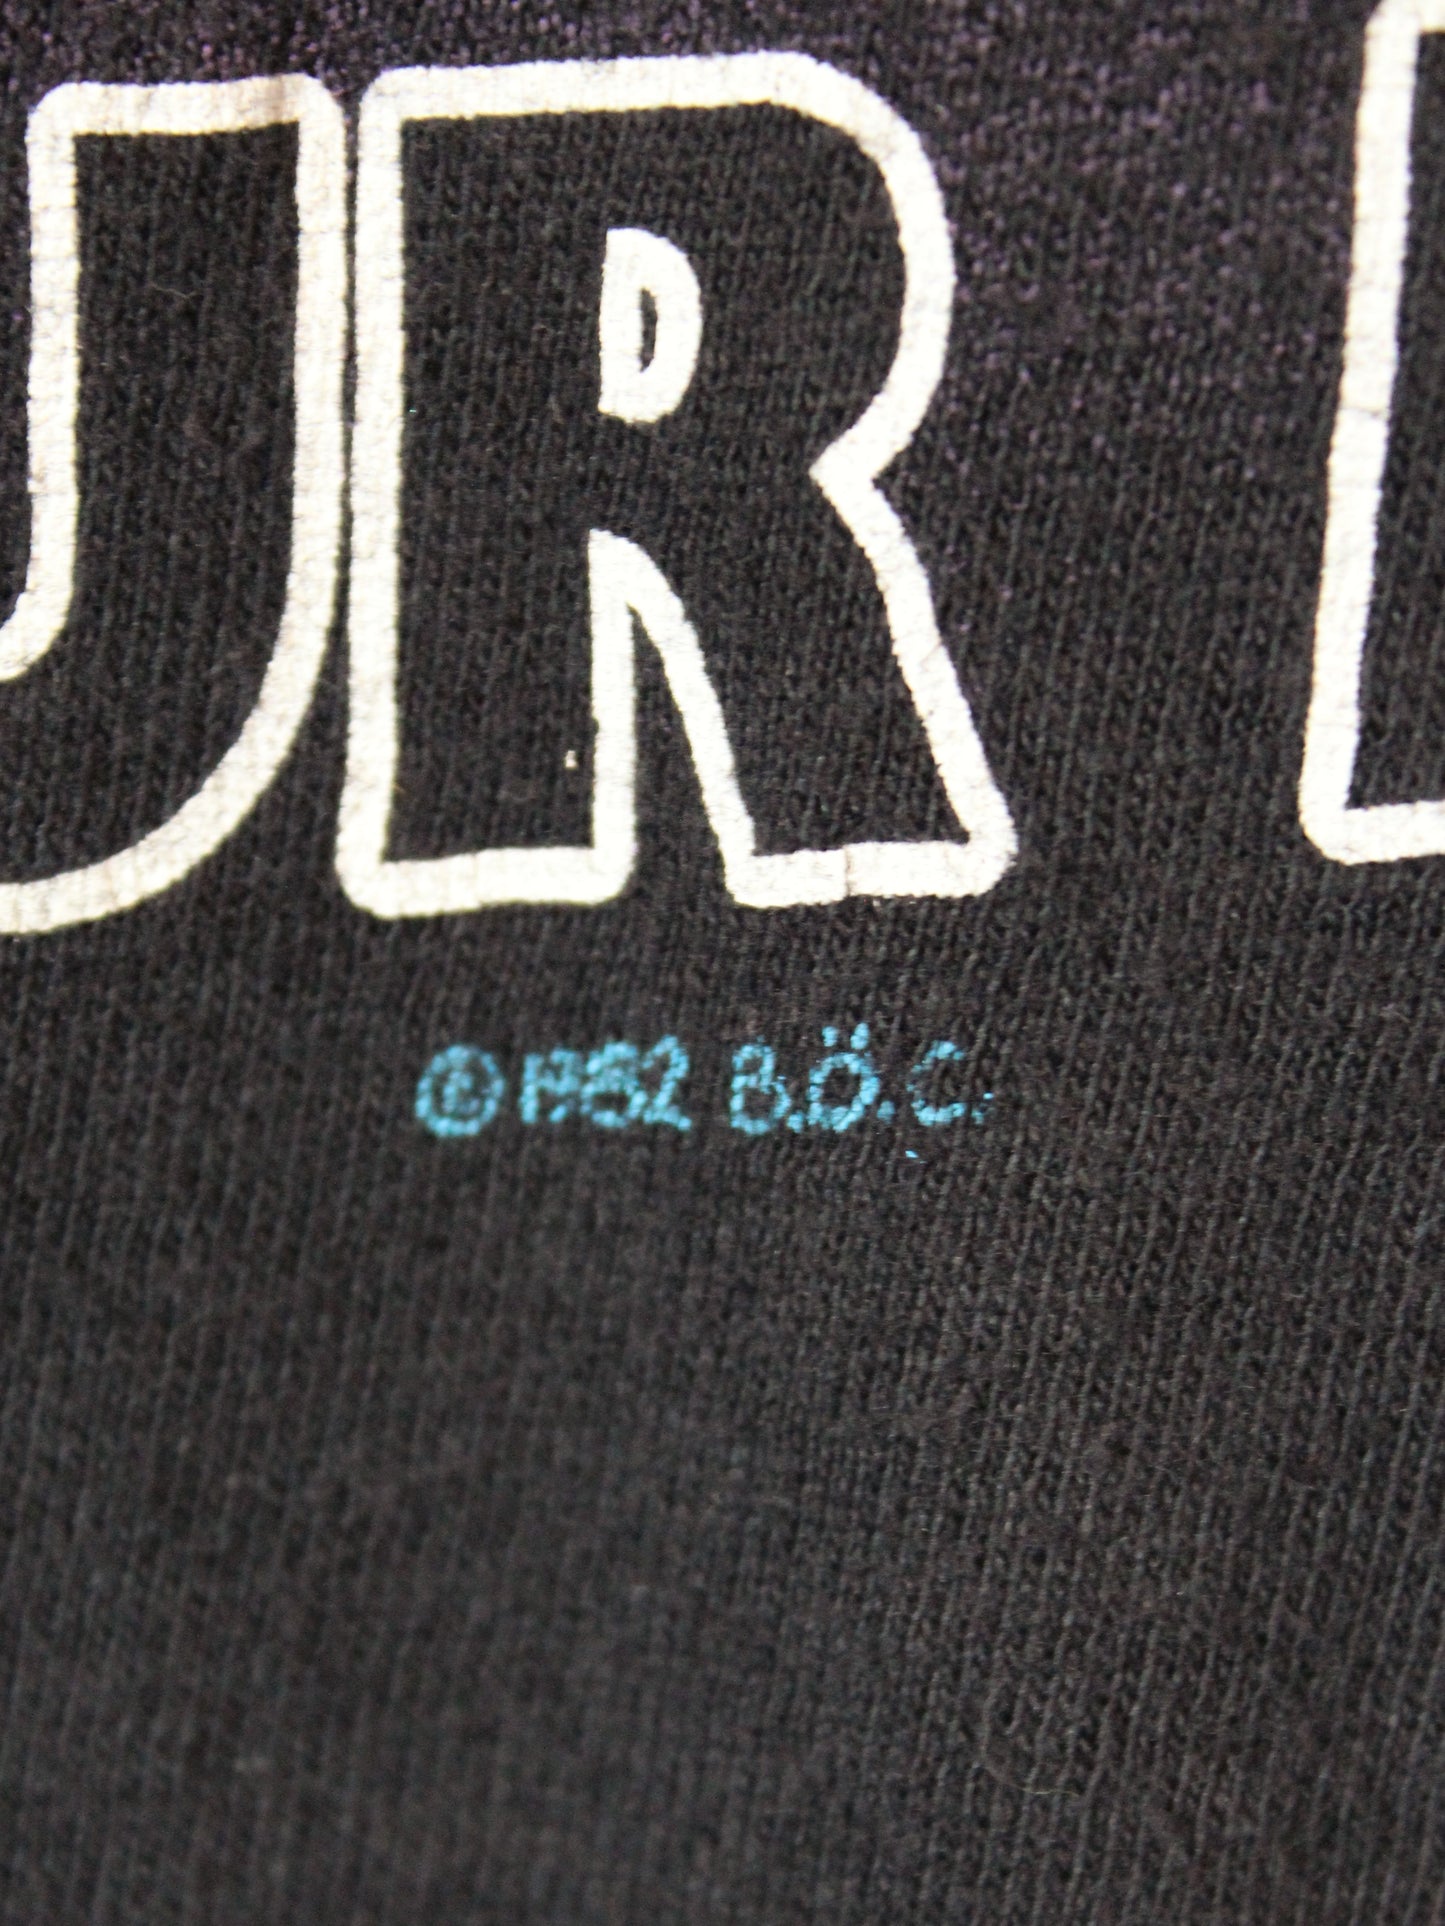 Vintage Blue Oyster Cult Concert T Shirt 1982 Unisex Small Medium